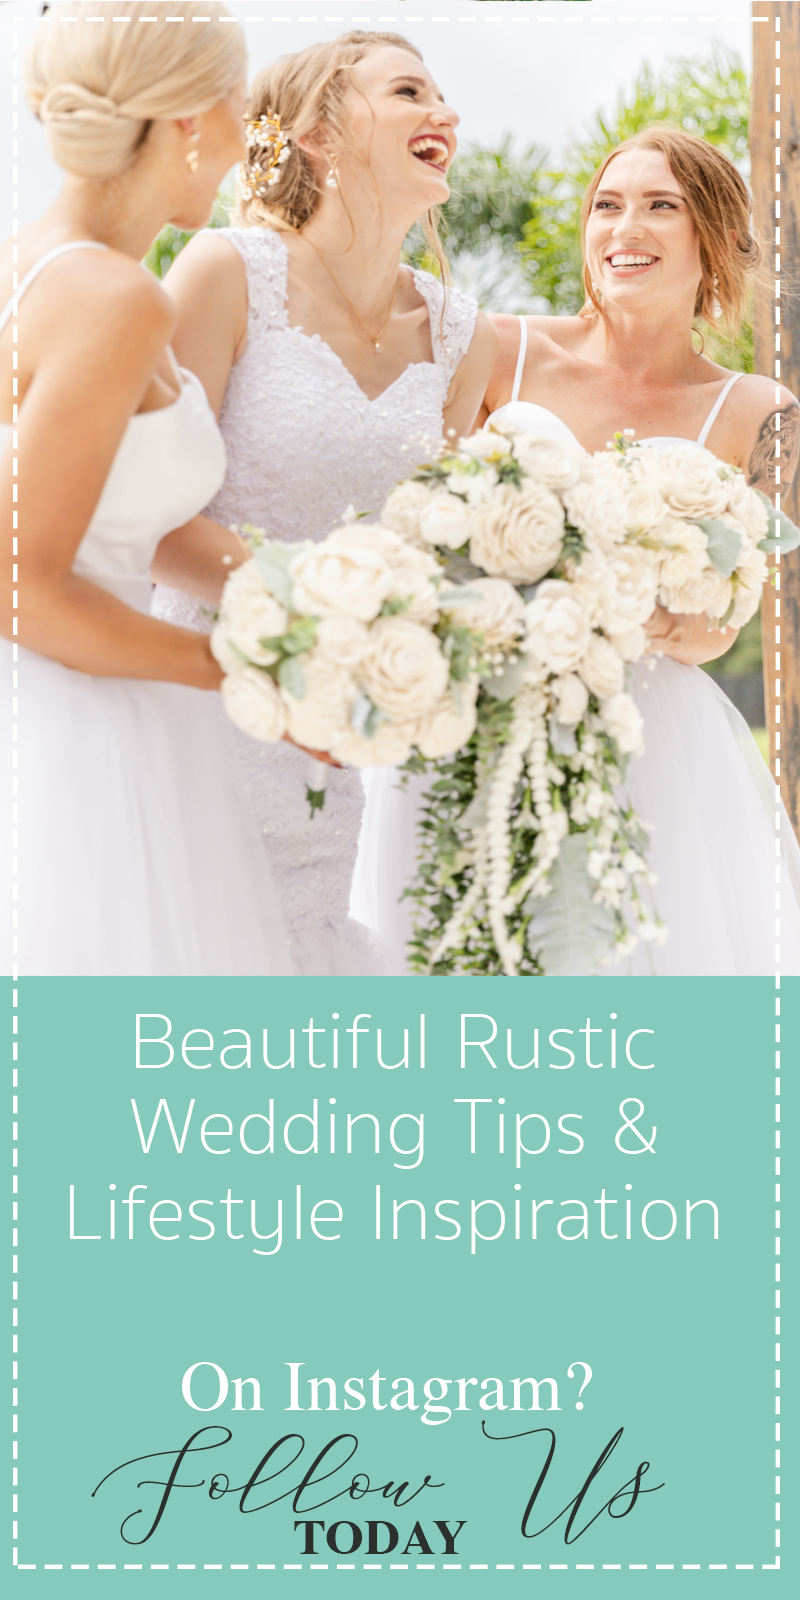 Rustic Wedding Inspiration - Instagram